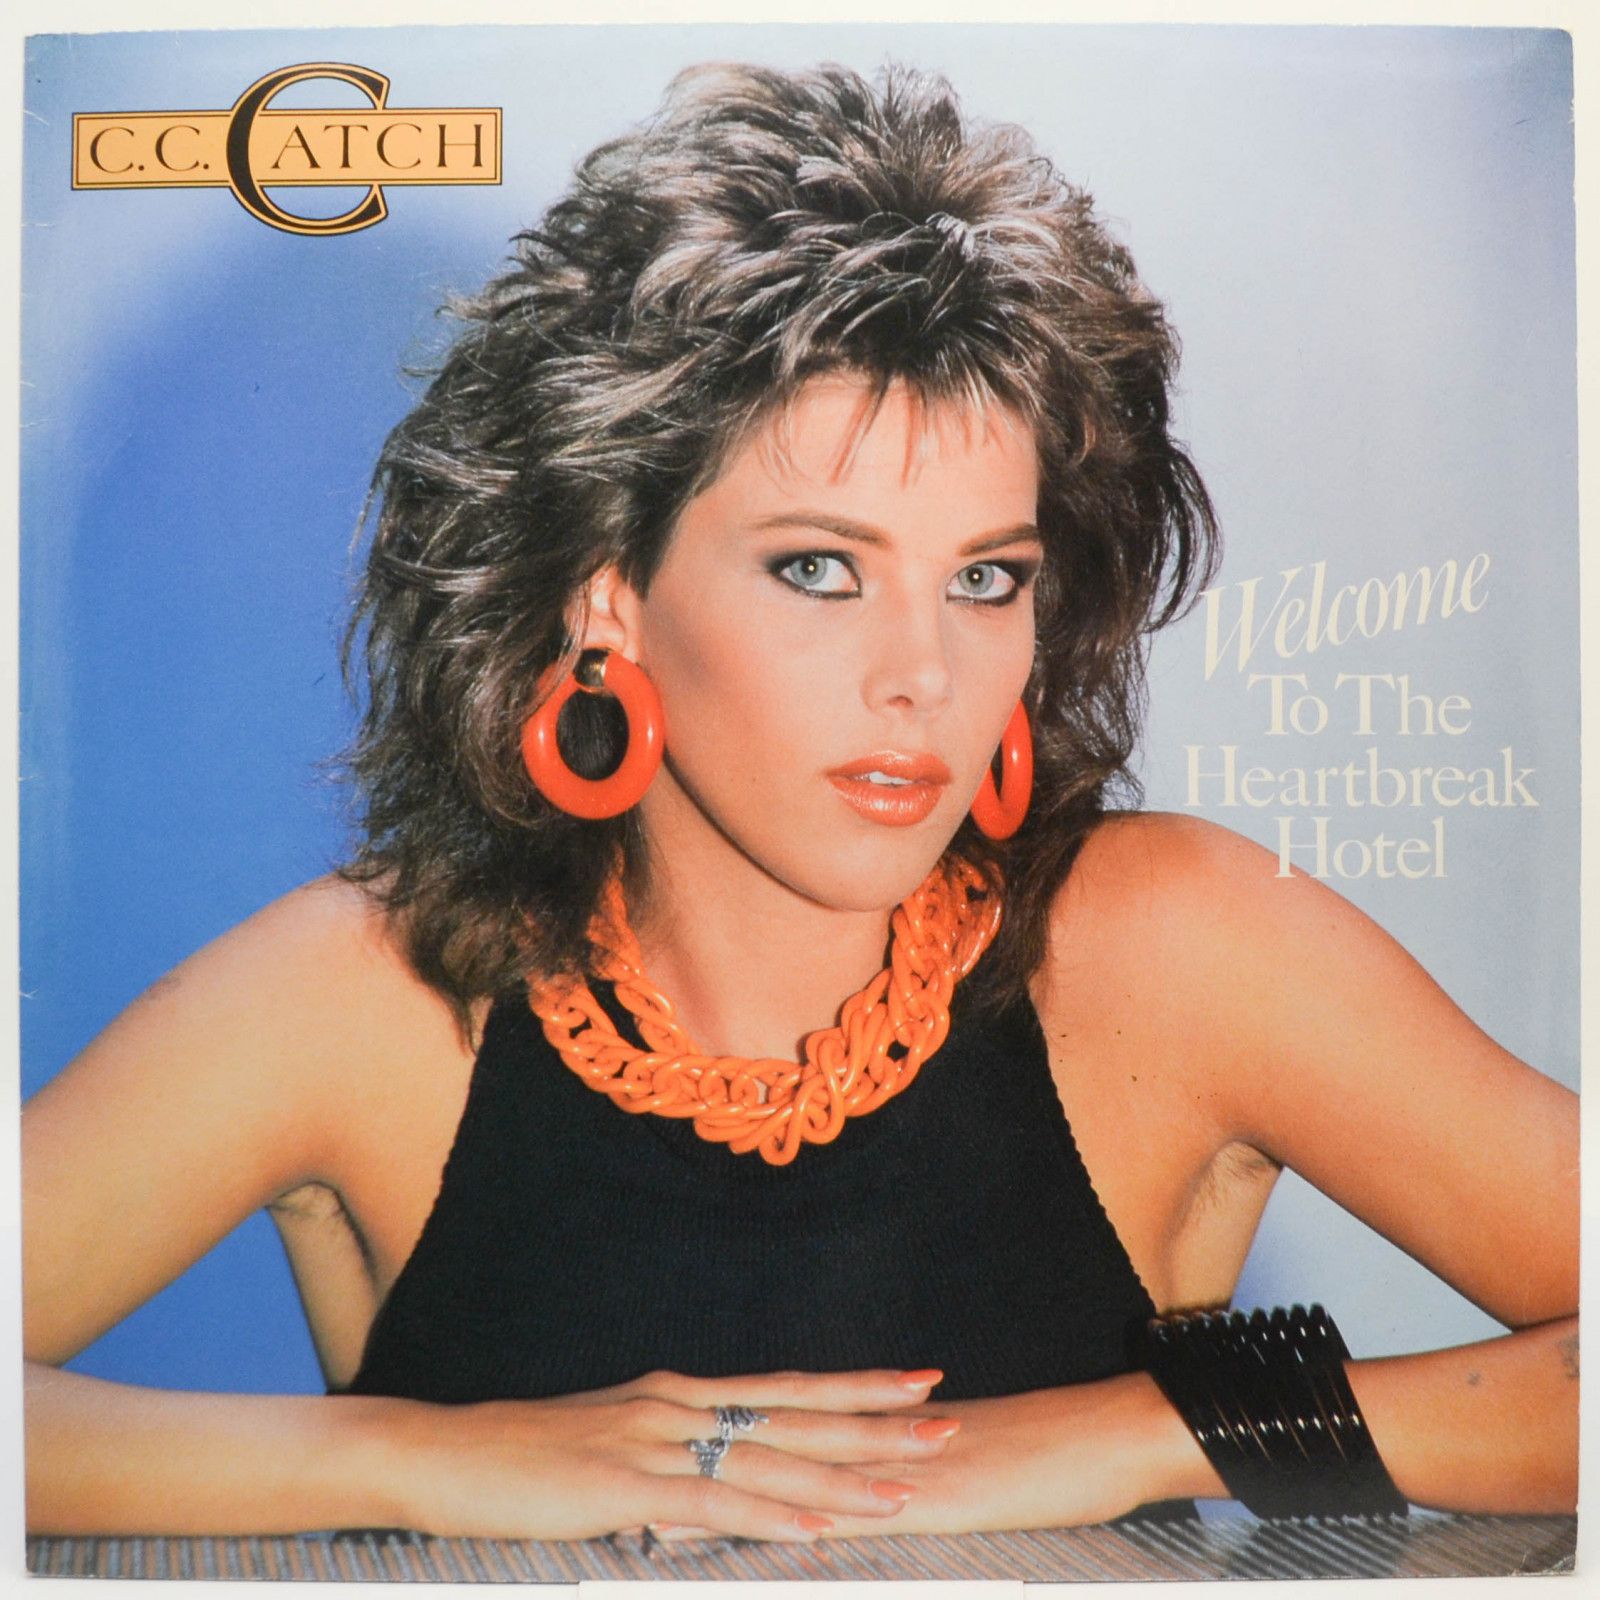 C.C. Catch — Welcome To The Heartbreak Hotel, 1986